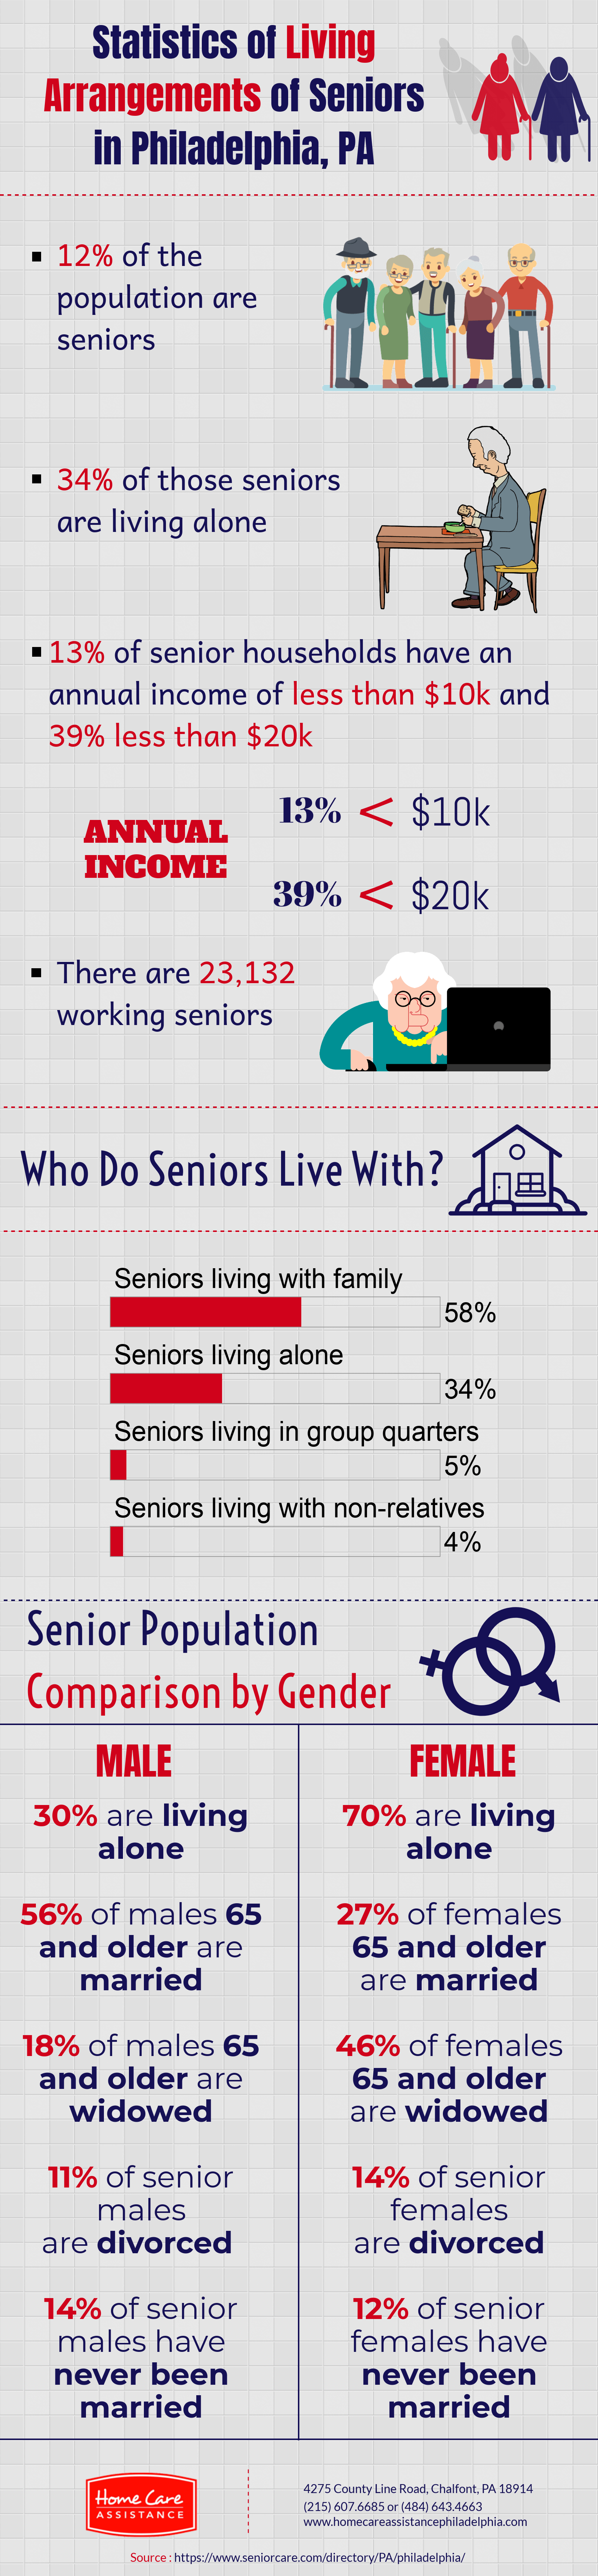 Statistics of Living Arrangements of Seniors in Philadelphia, PA